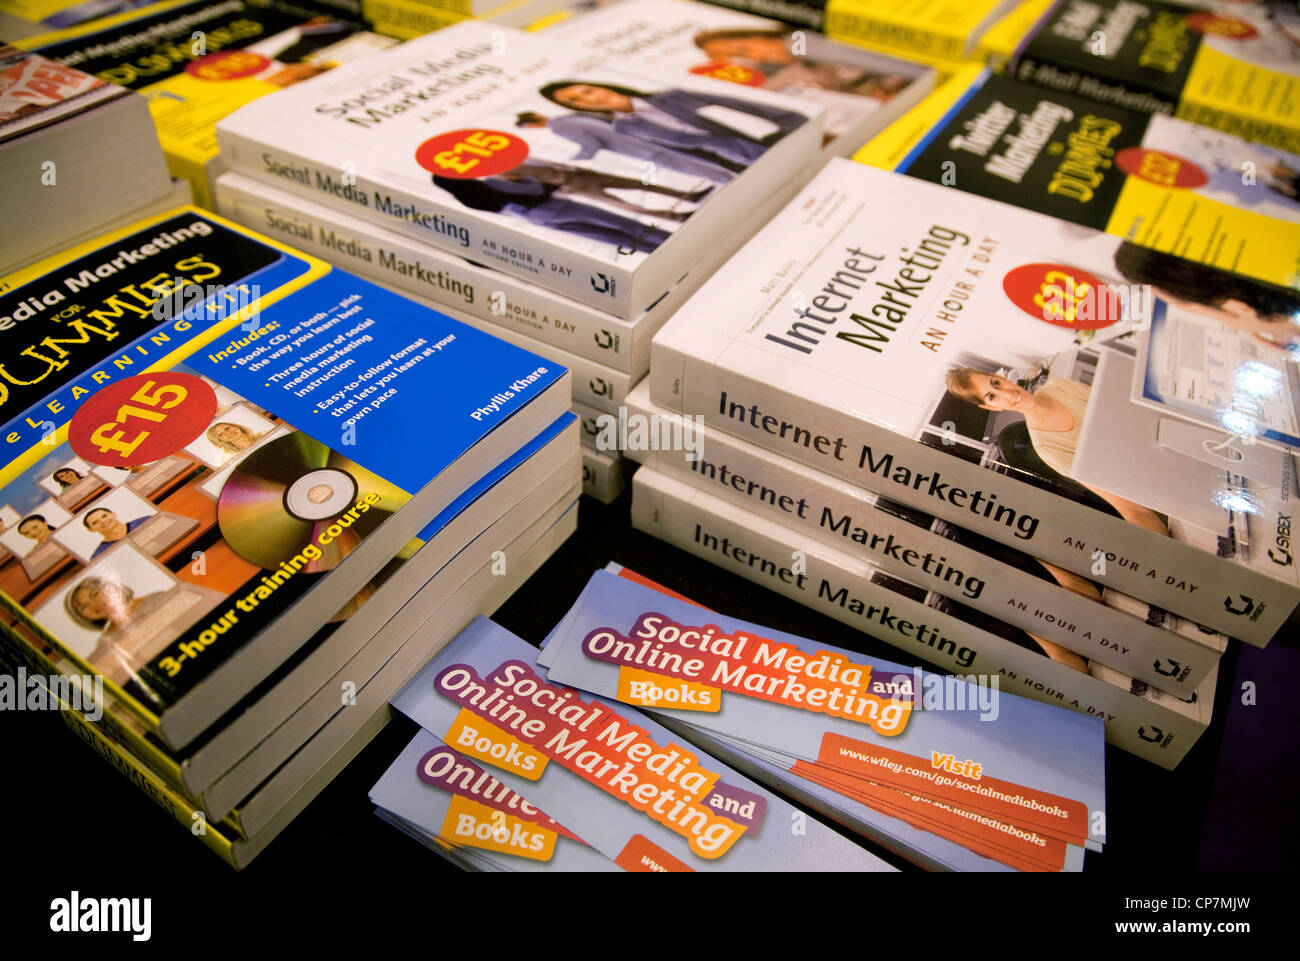 Internet and social media marketing books at Internet World show, London Stock Photo